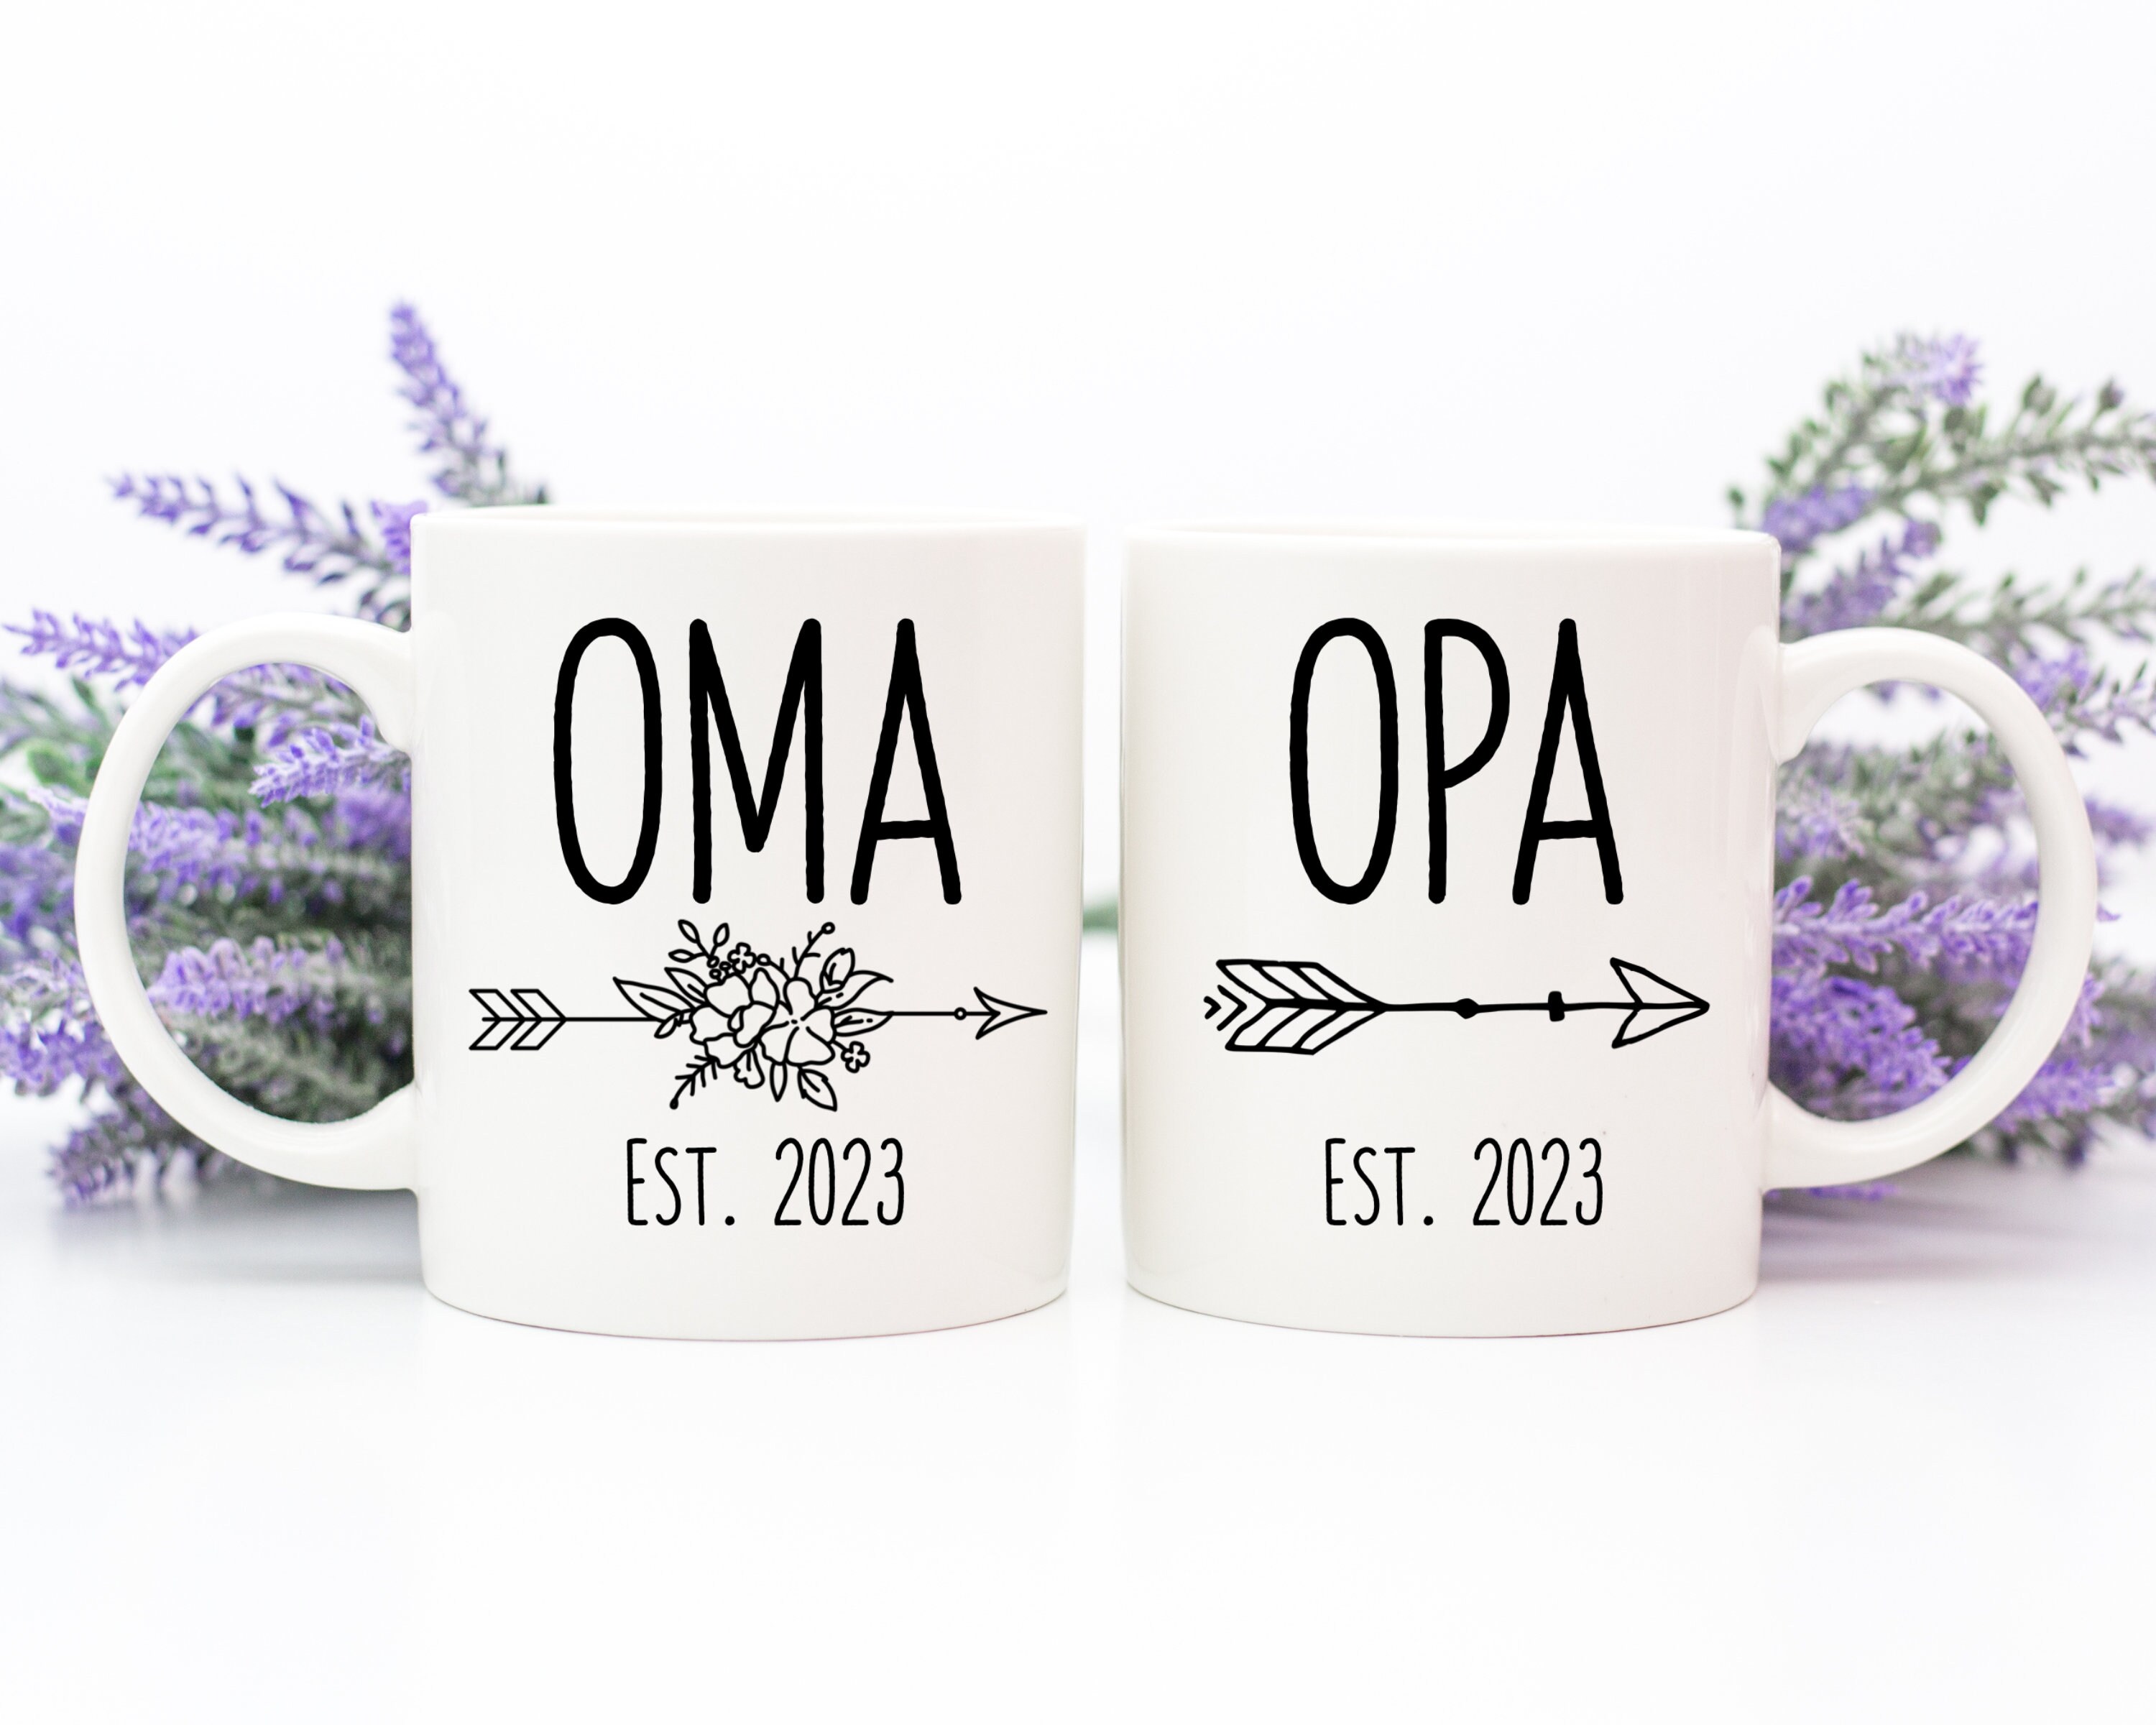 Oma and Opa Mugs